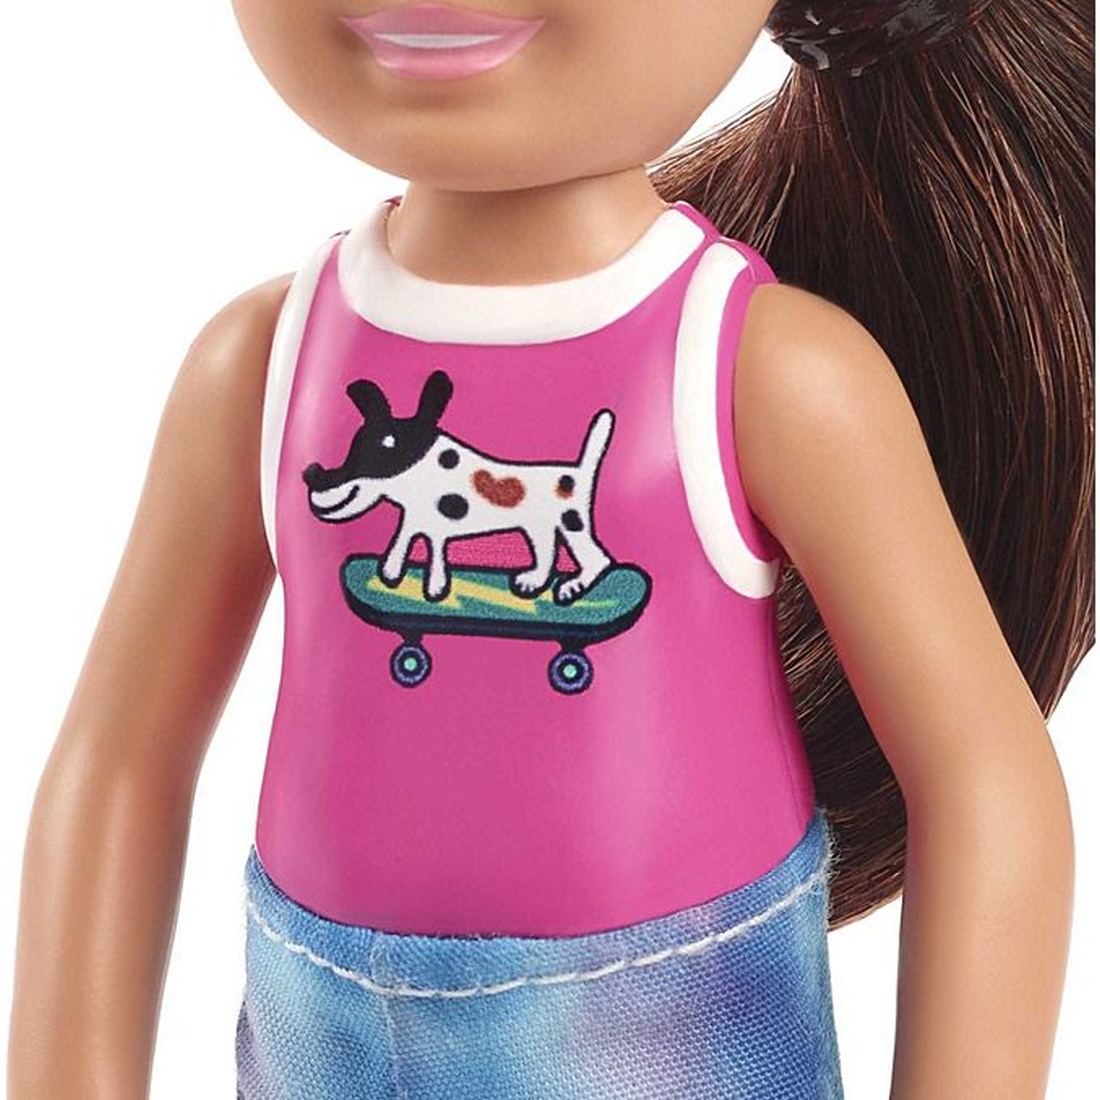 Barbie - Chelsea - Καστανό Κοριτσάκι Με Φούξια Μπλούζα